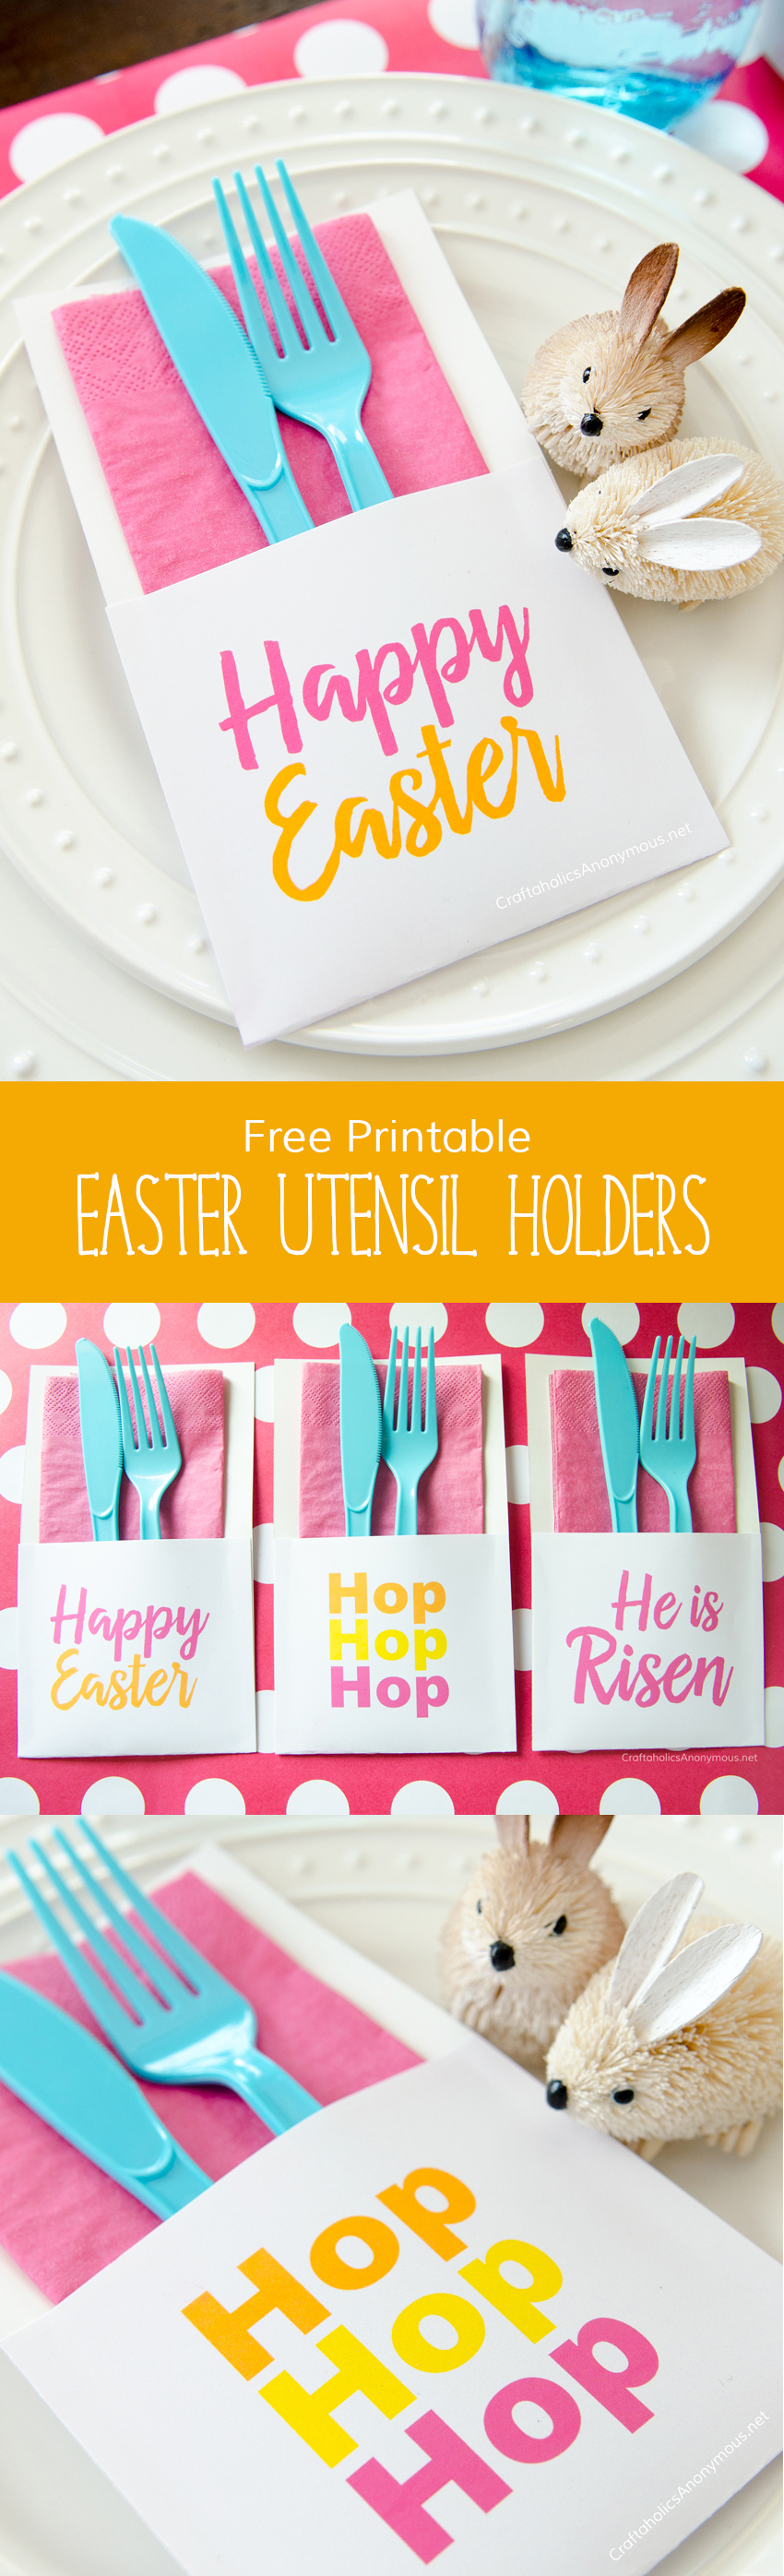 Free Printable Easter Utensil Holders :: 3 designs to choose from! www.CraftaholicsAnonymous.net